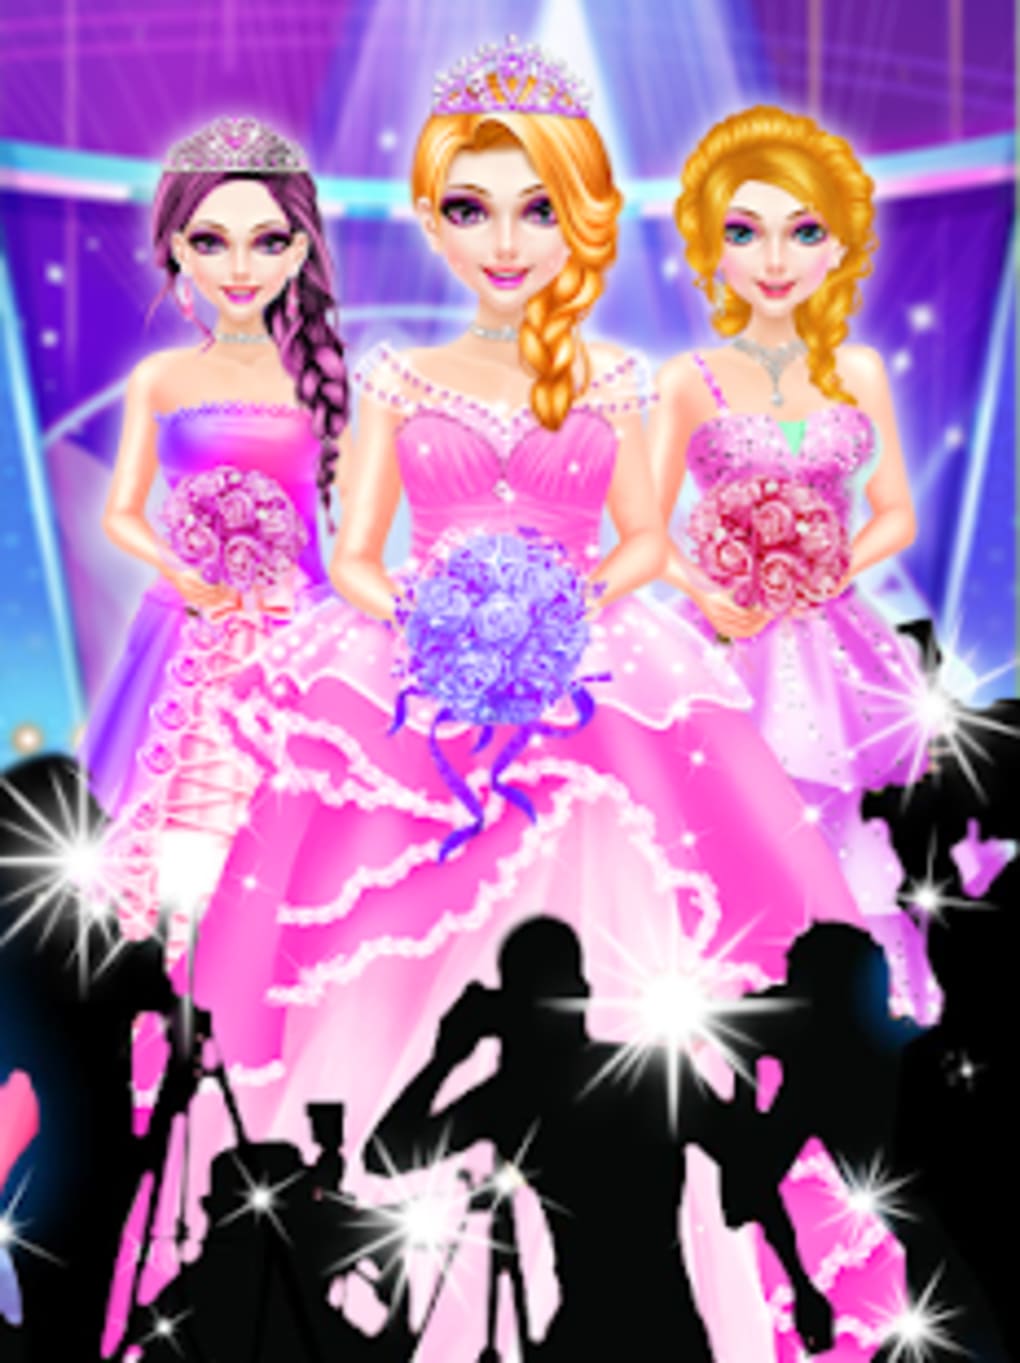 Dress barbie up indian wedding games free play online Wedding Games